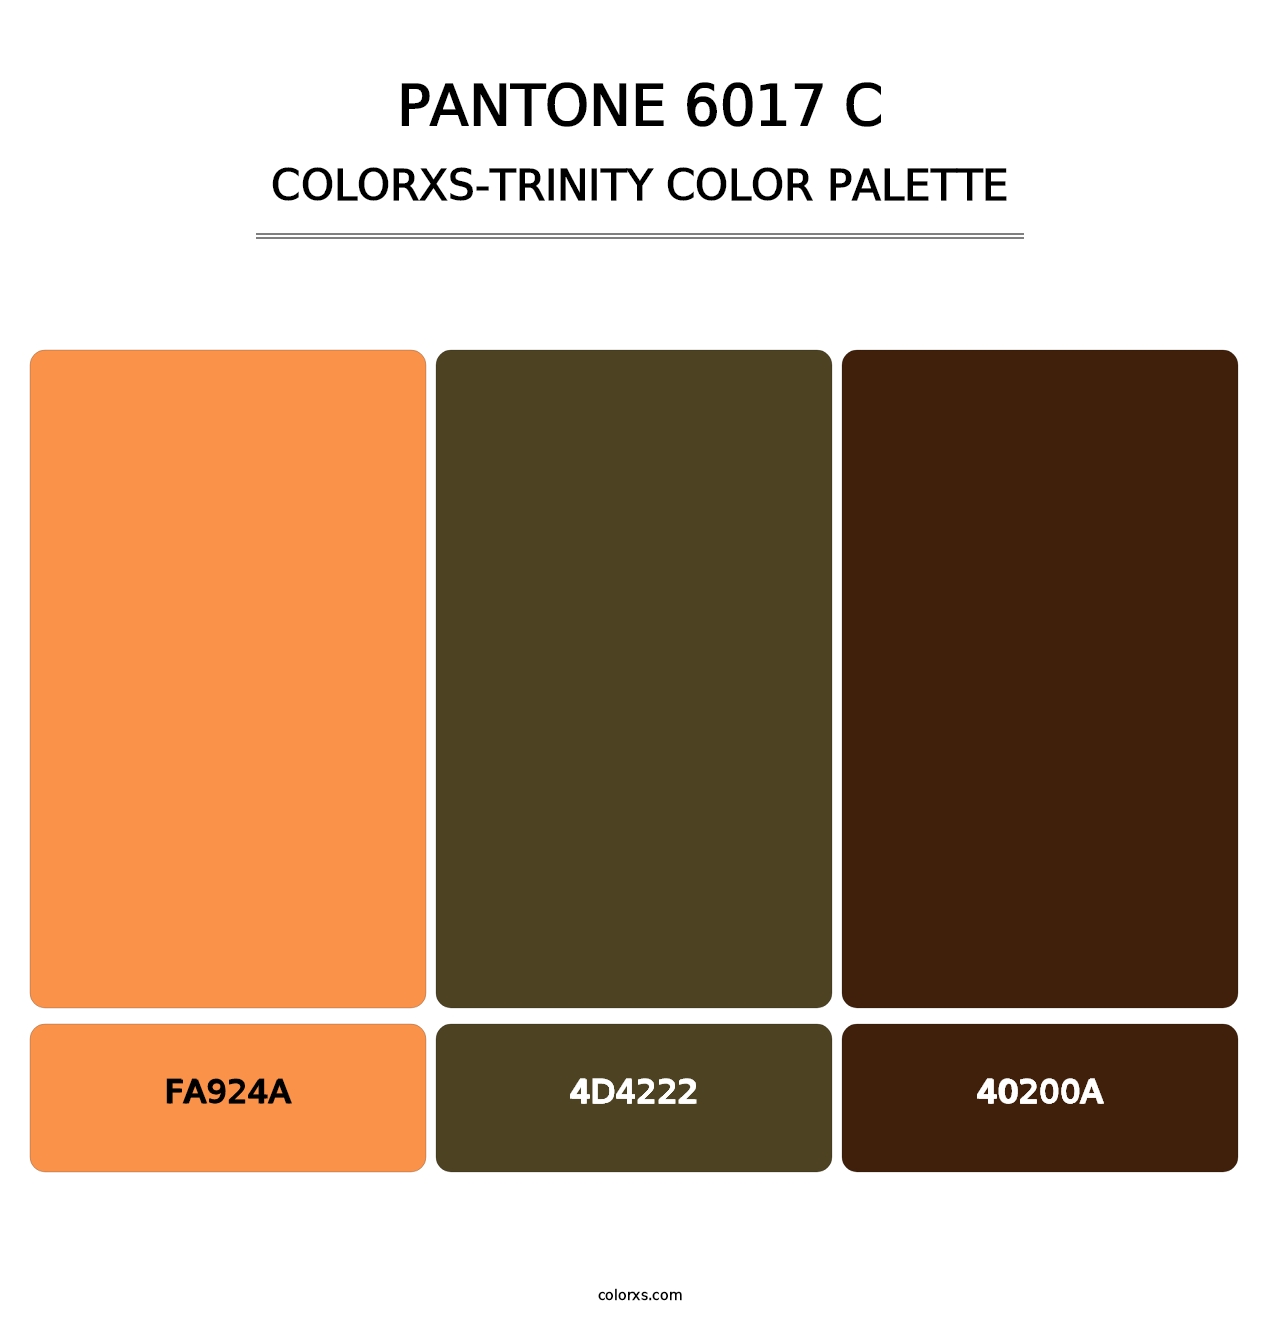 PANTONE 6017 C - Colorxs Trinity Palette